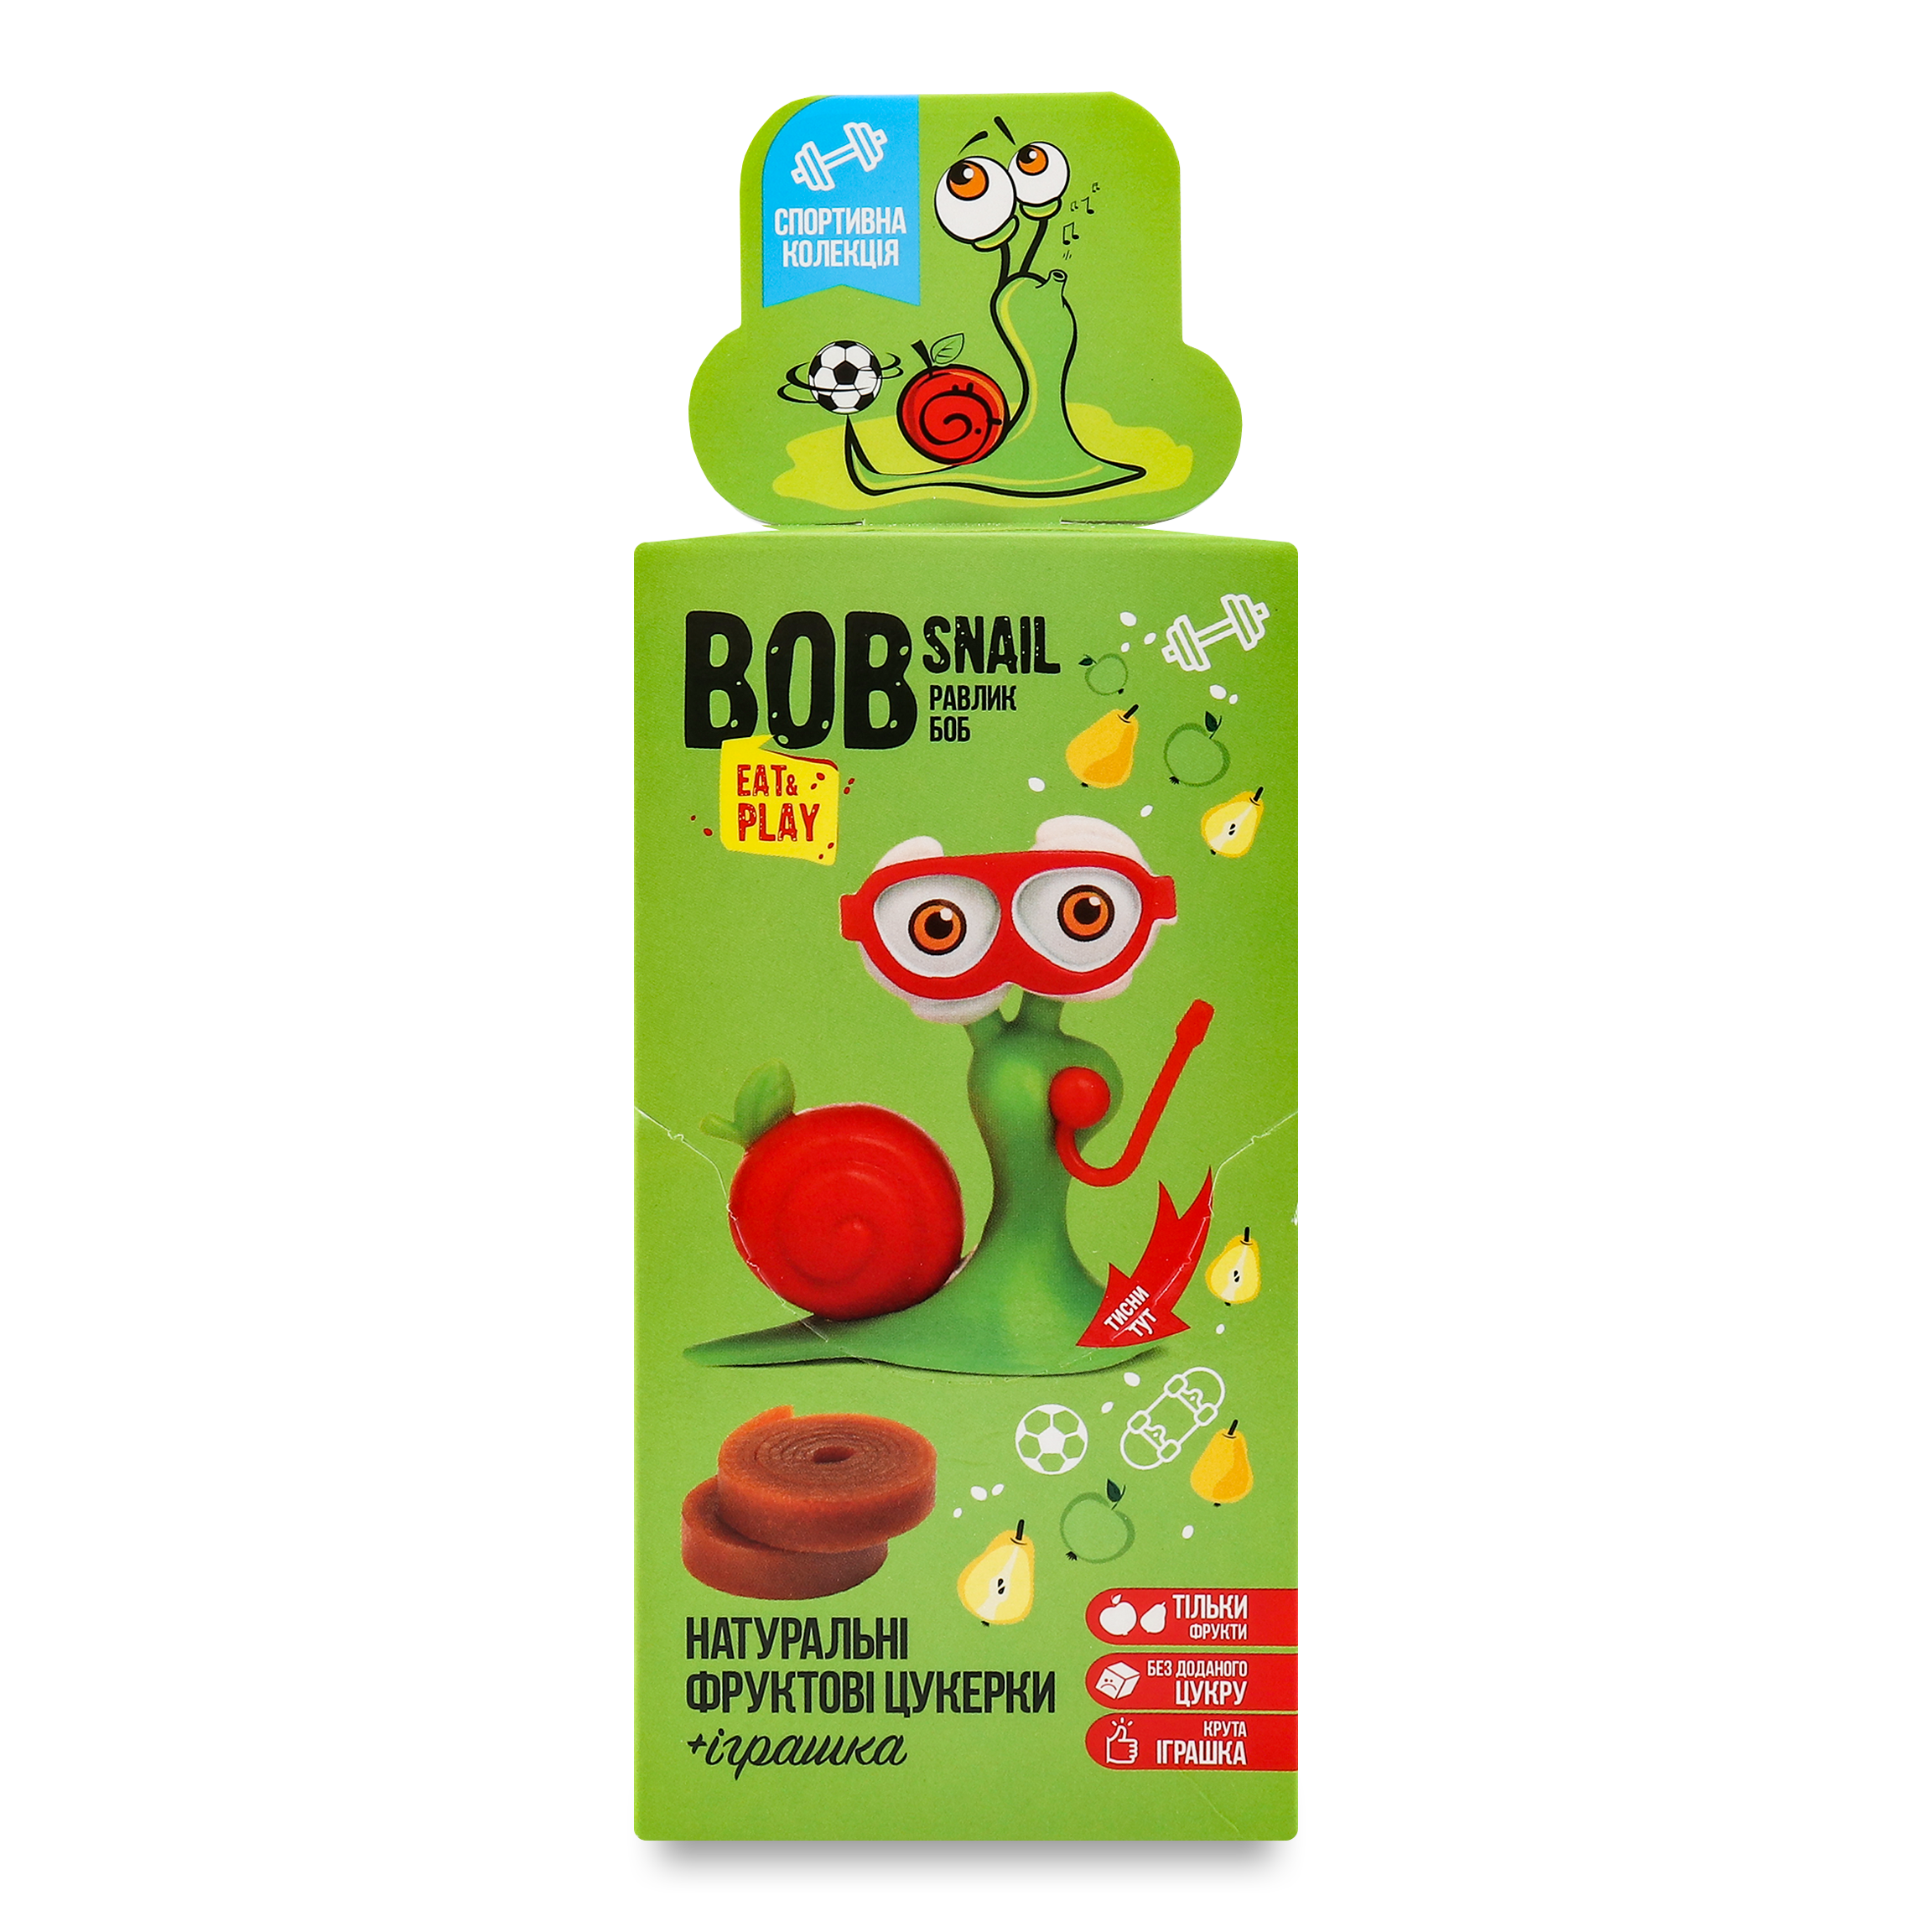 Набір Цукерки Bob Snail яблуко-груша 20г та іграшка